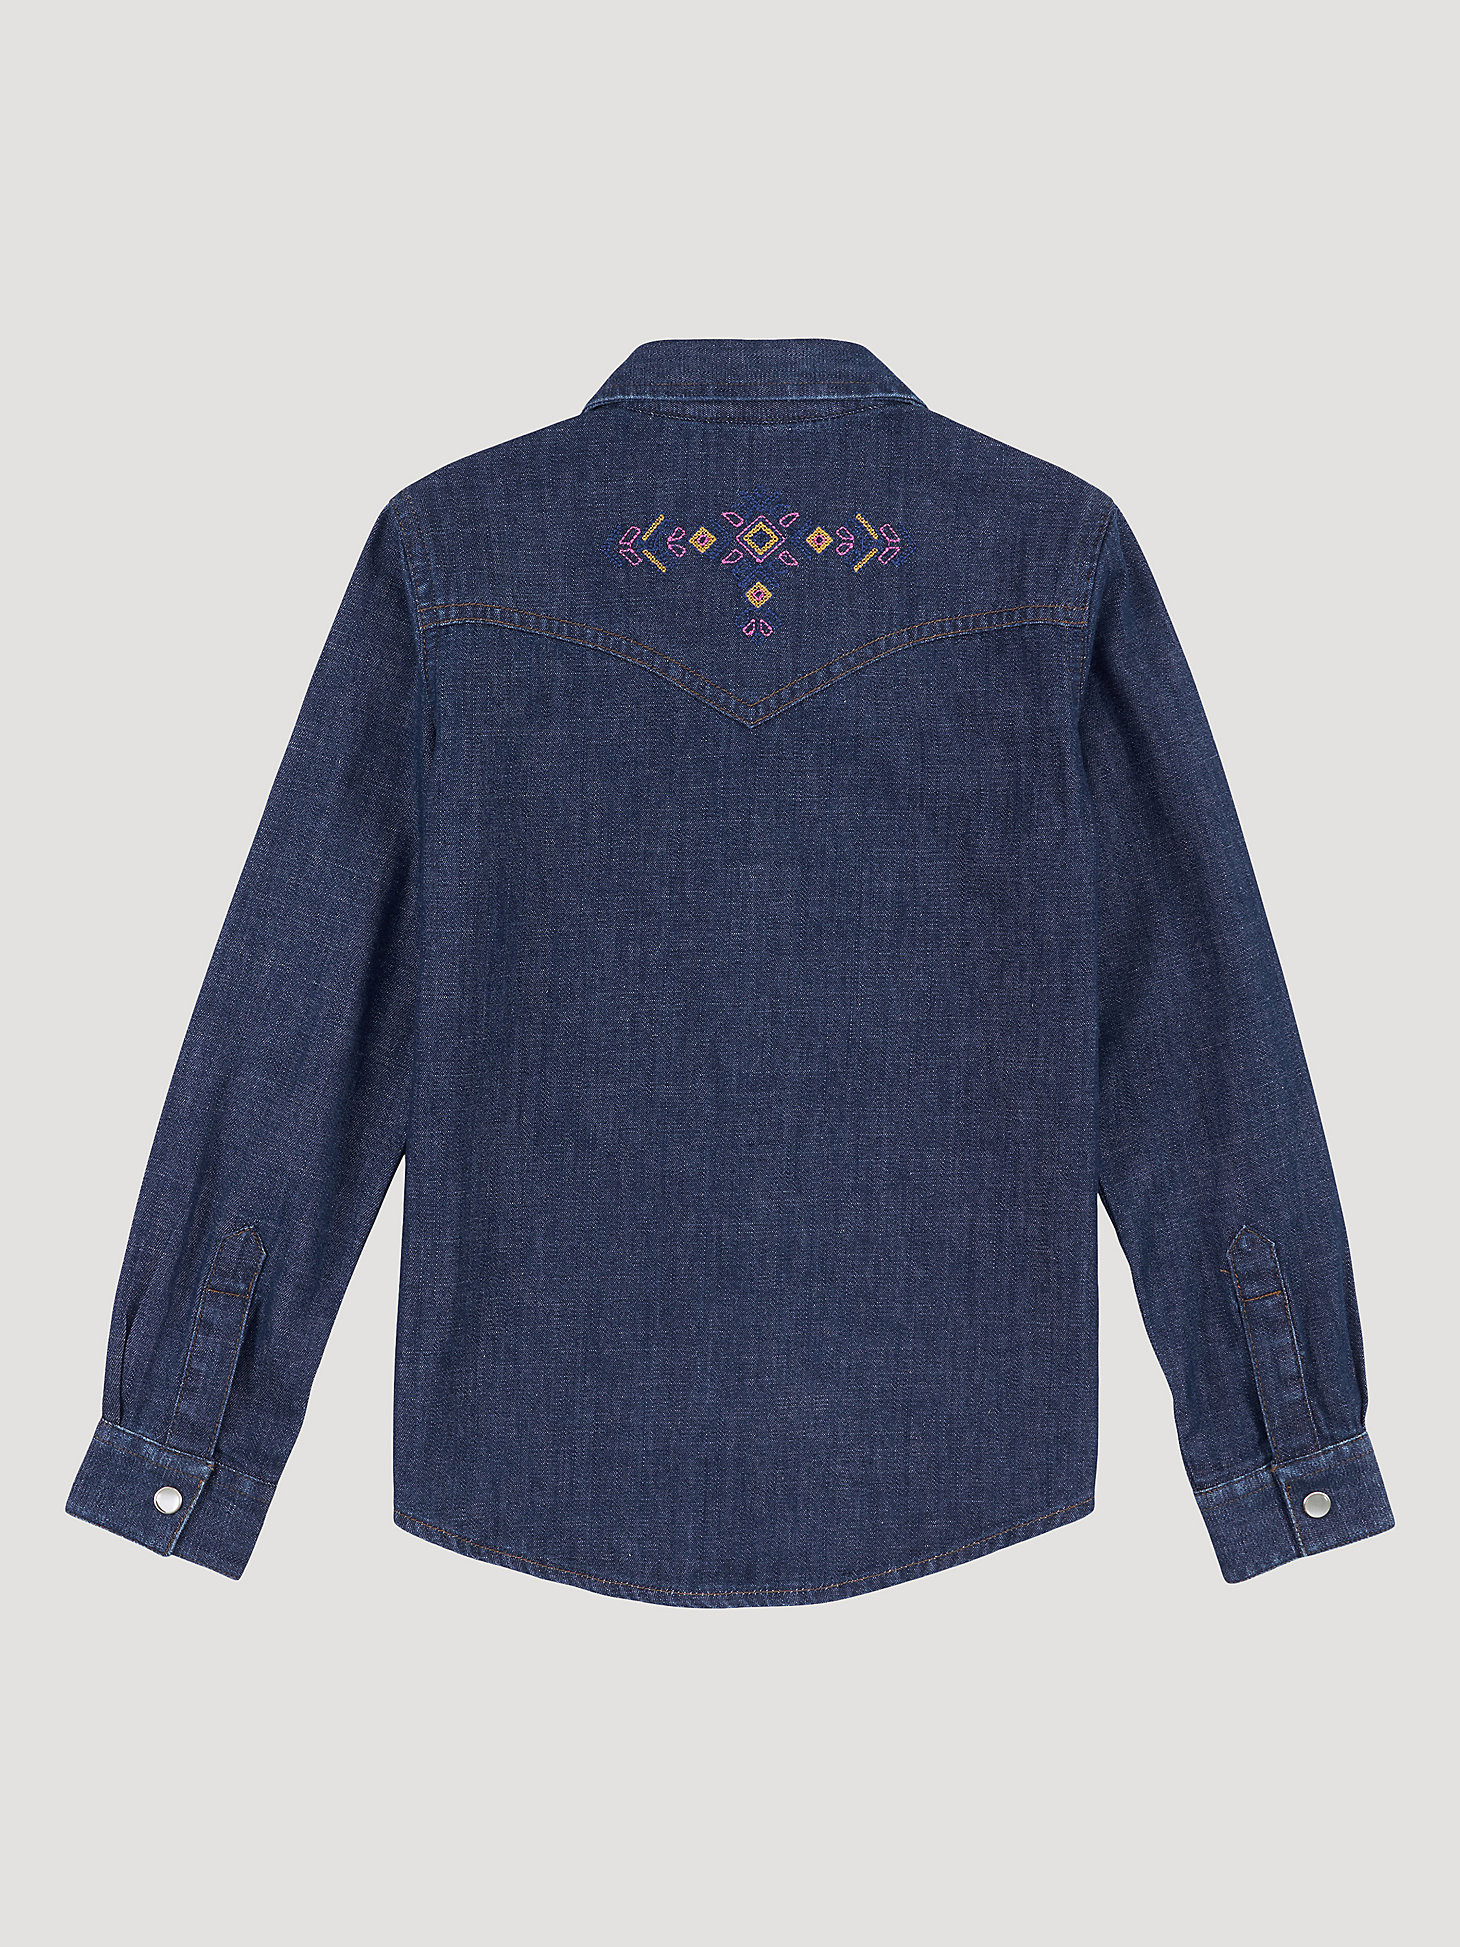 Girl's Long Sleeve Embroidered Western Snap Denim Shirt in Blue Denim alternative view 3